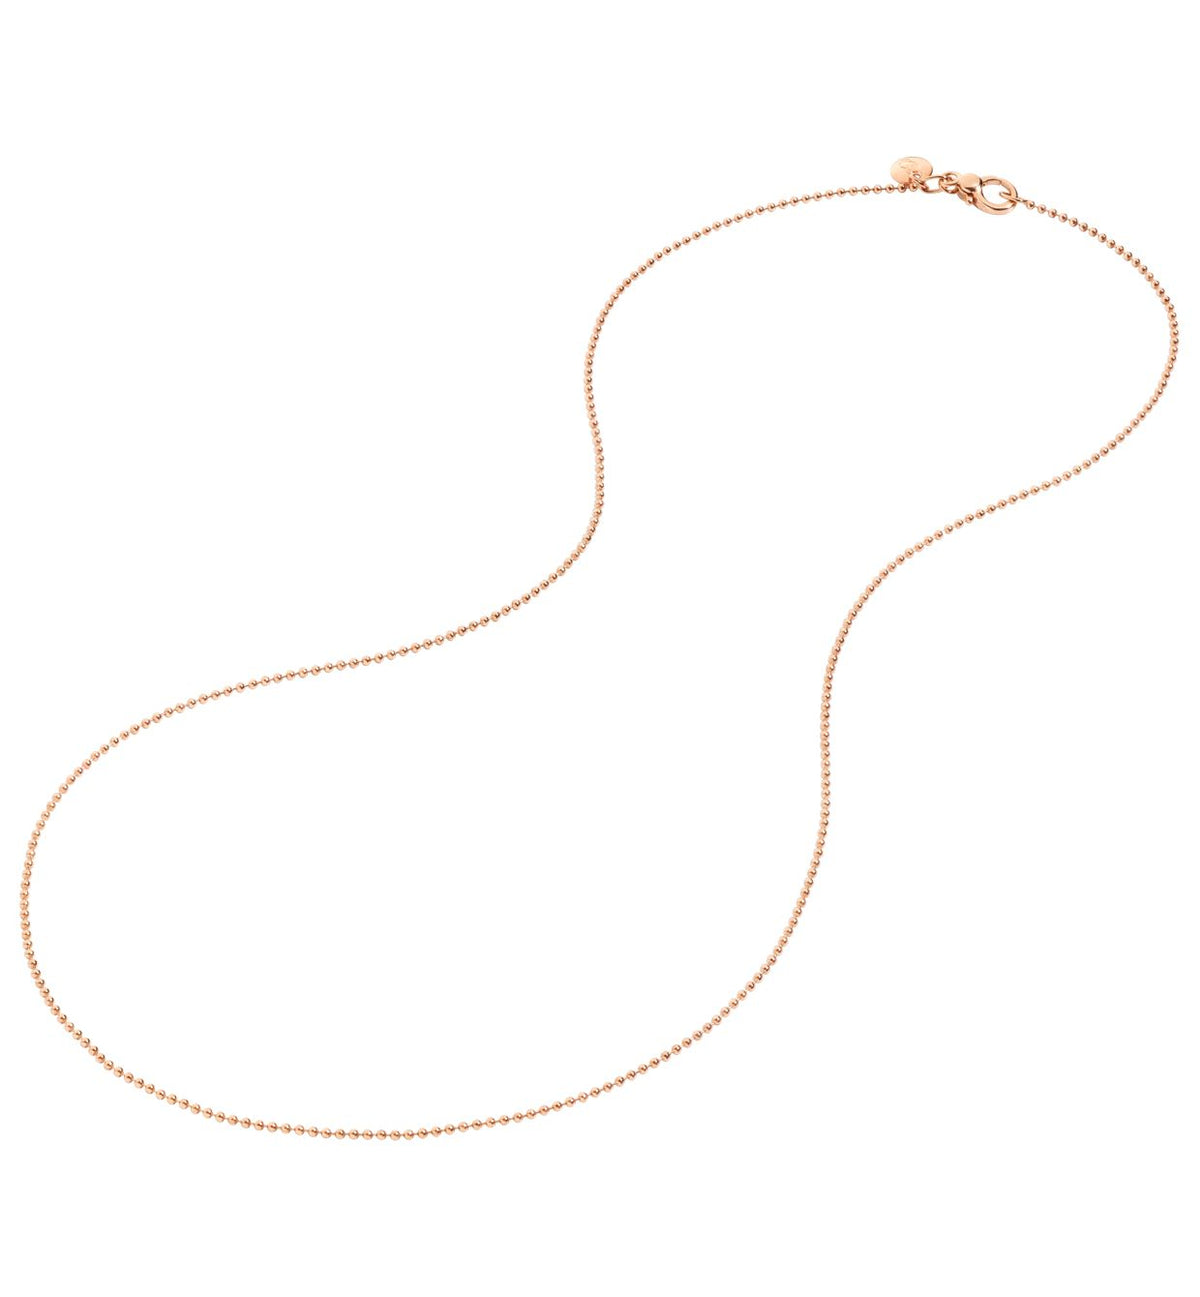 DoDo Bollicine Chain Necklace in 9k Rose Gold - Orsini Jewellers NZ